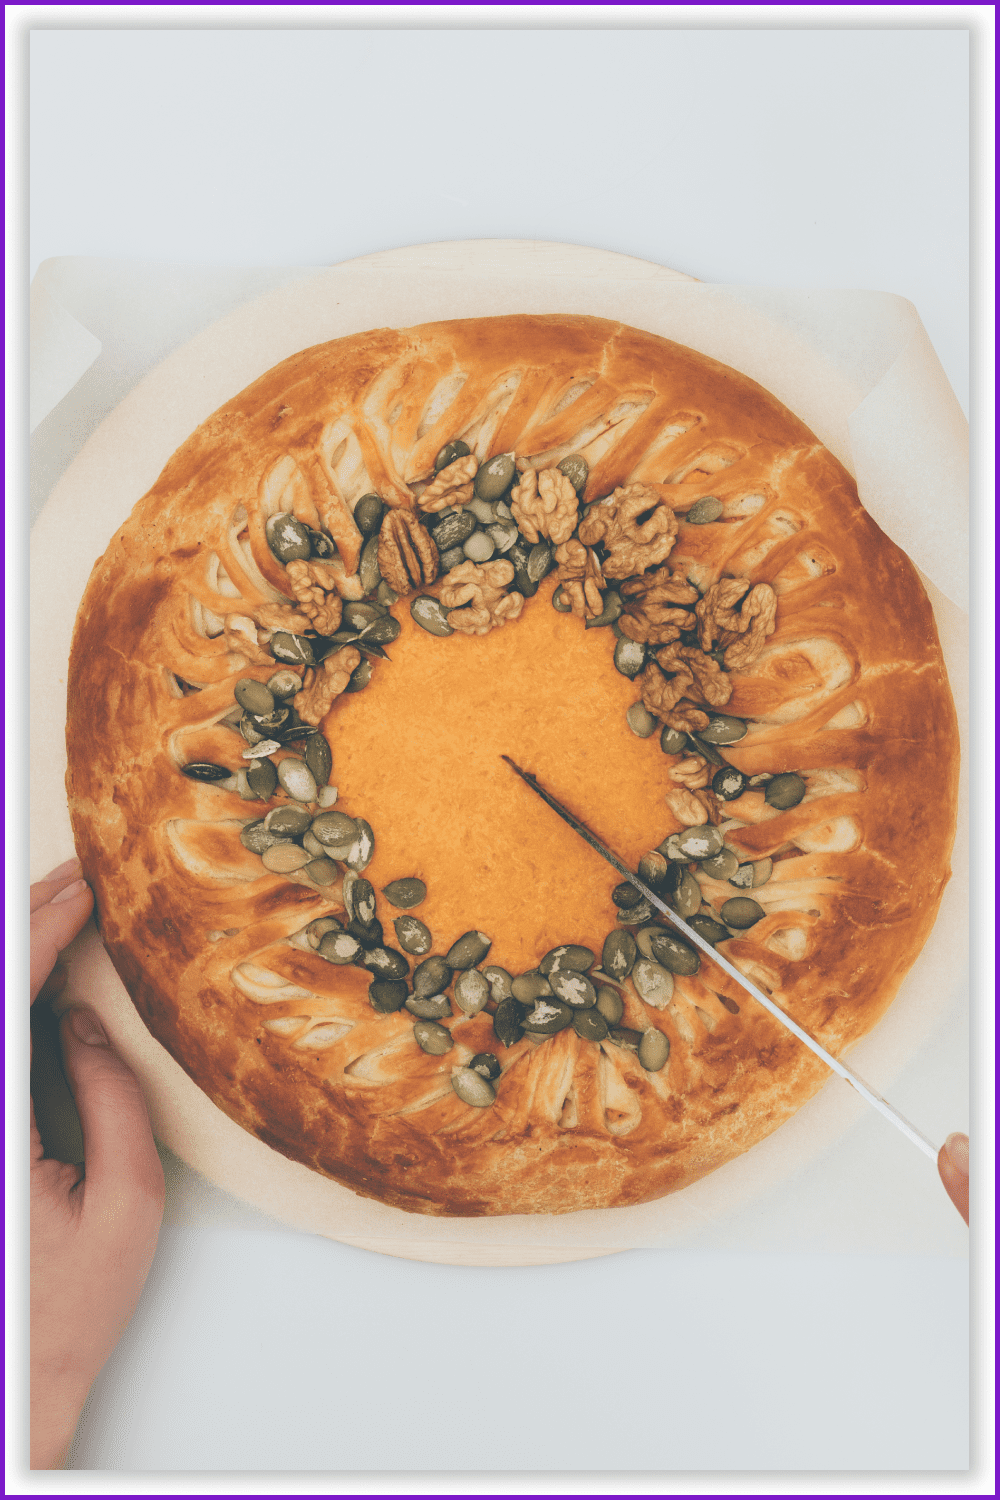 Hand with a knife cuts a pumpkin pie.